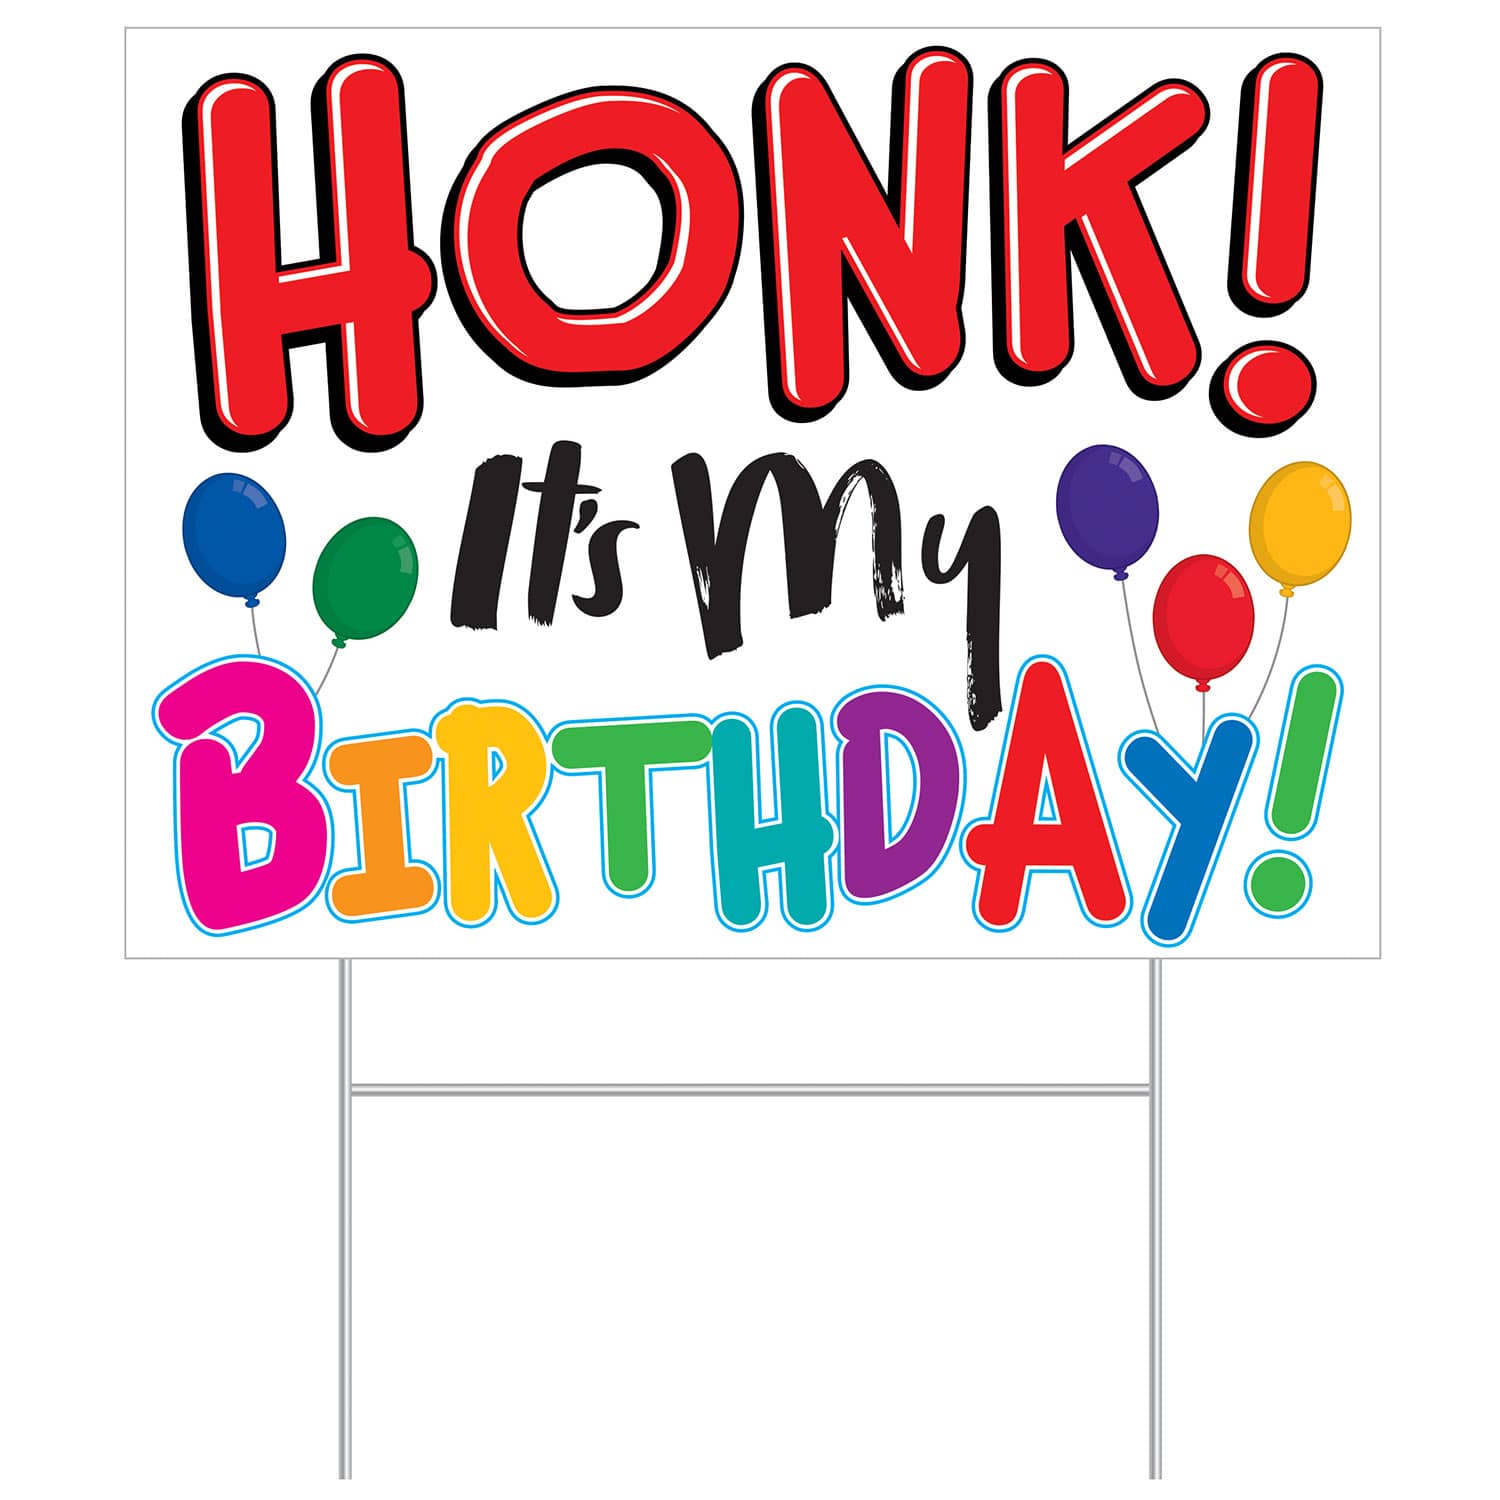 Honk Its MY Birthday Yard Sign